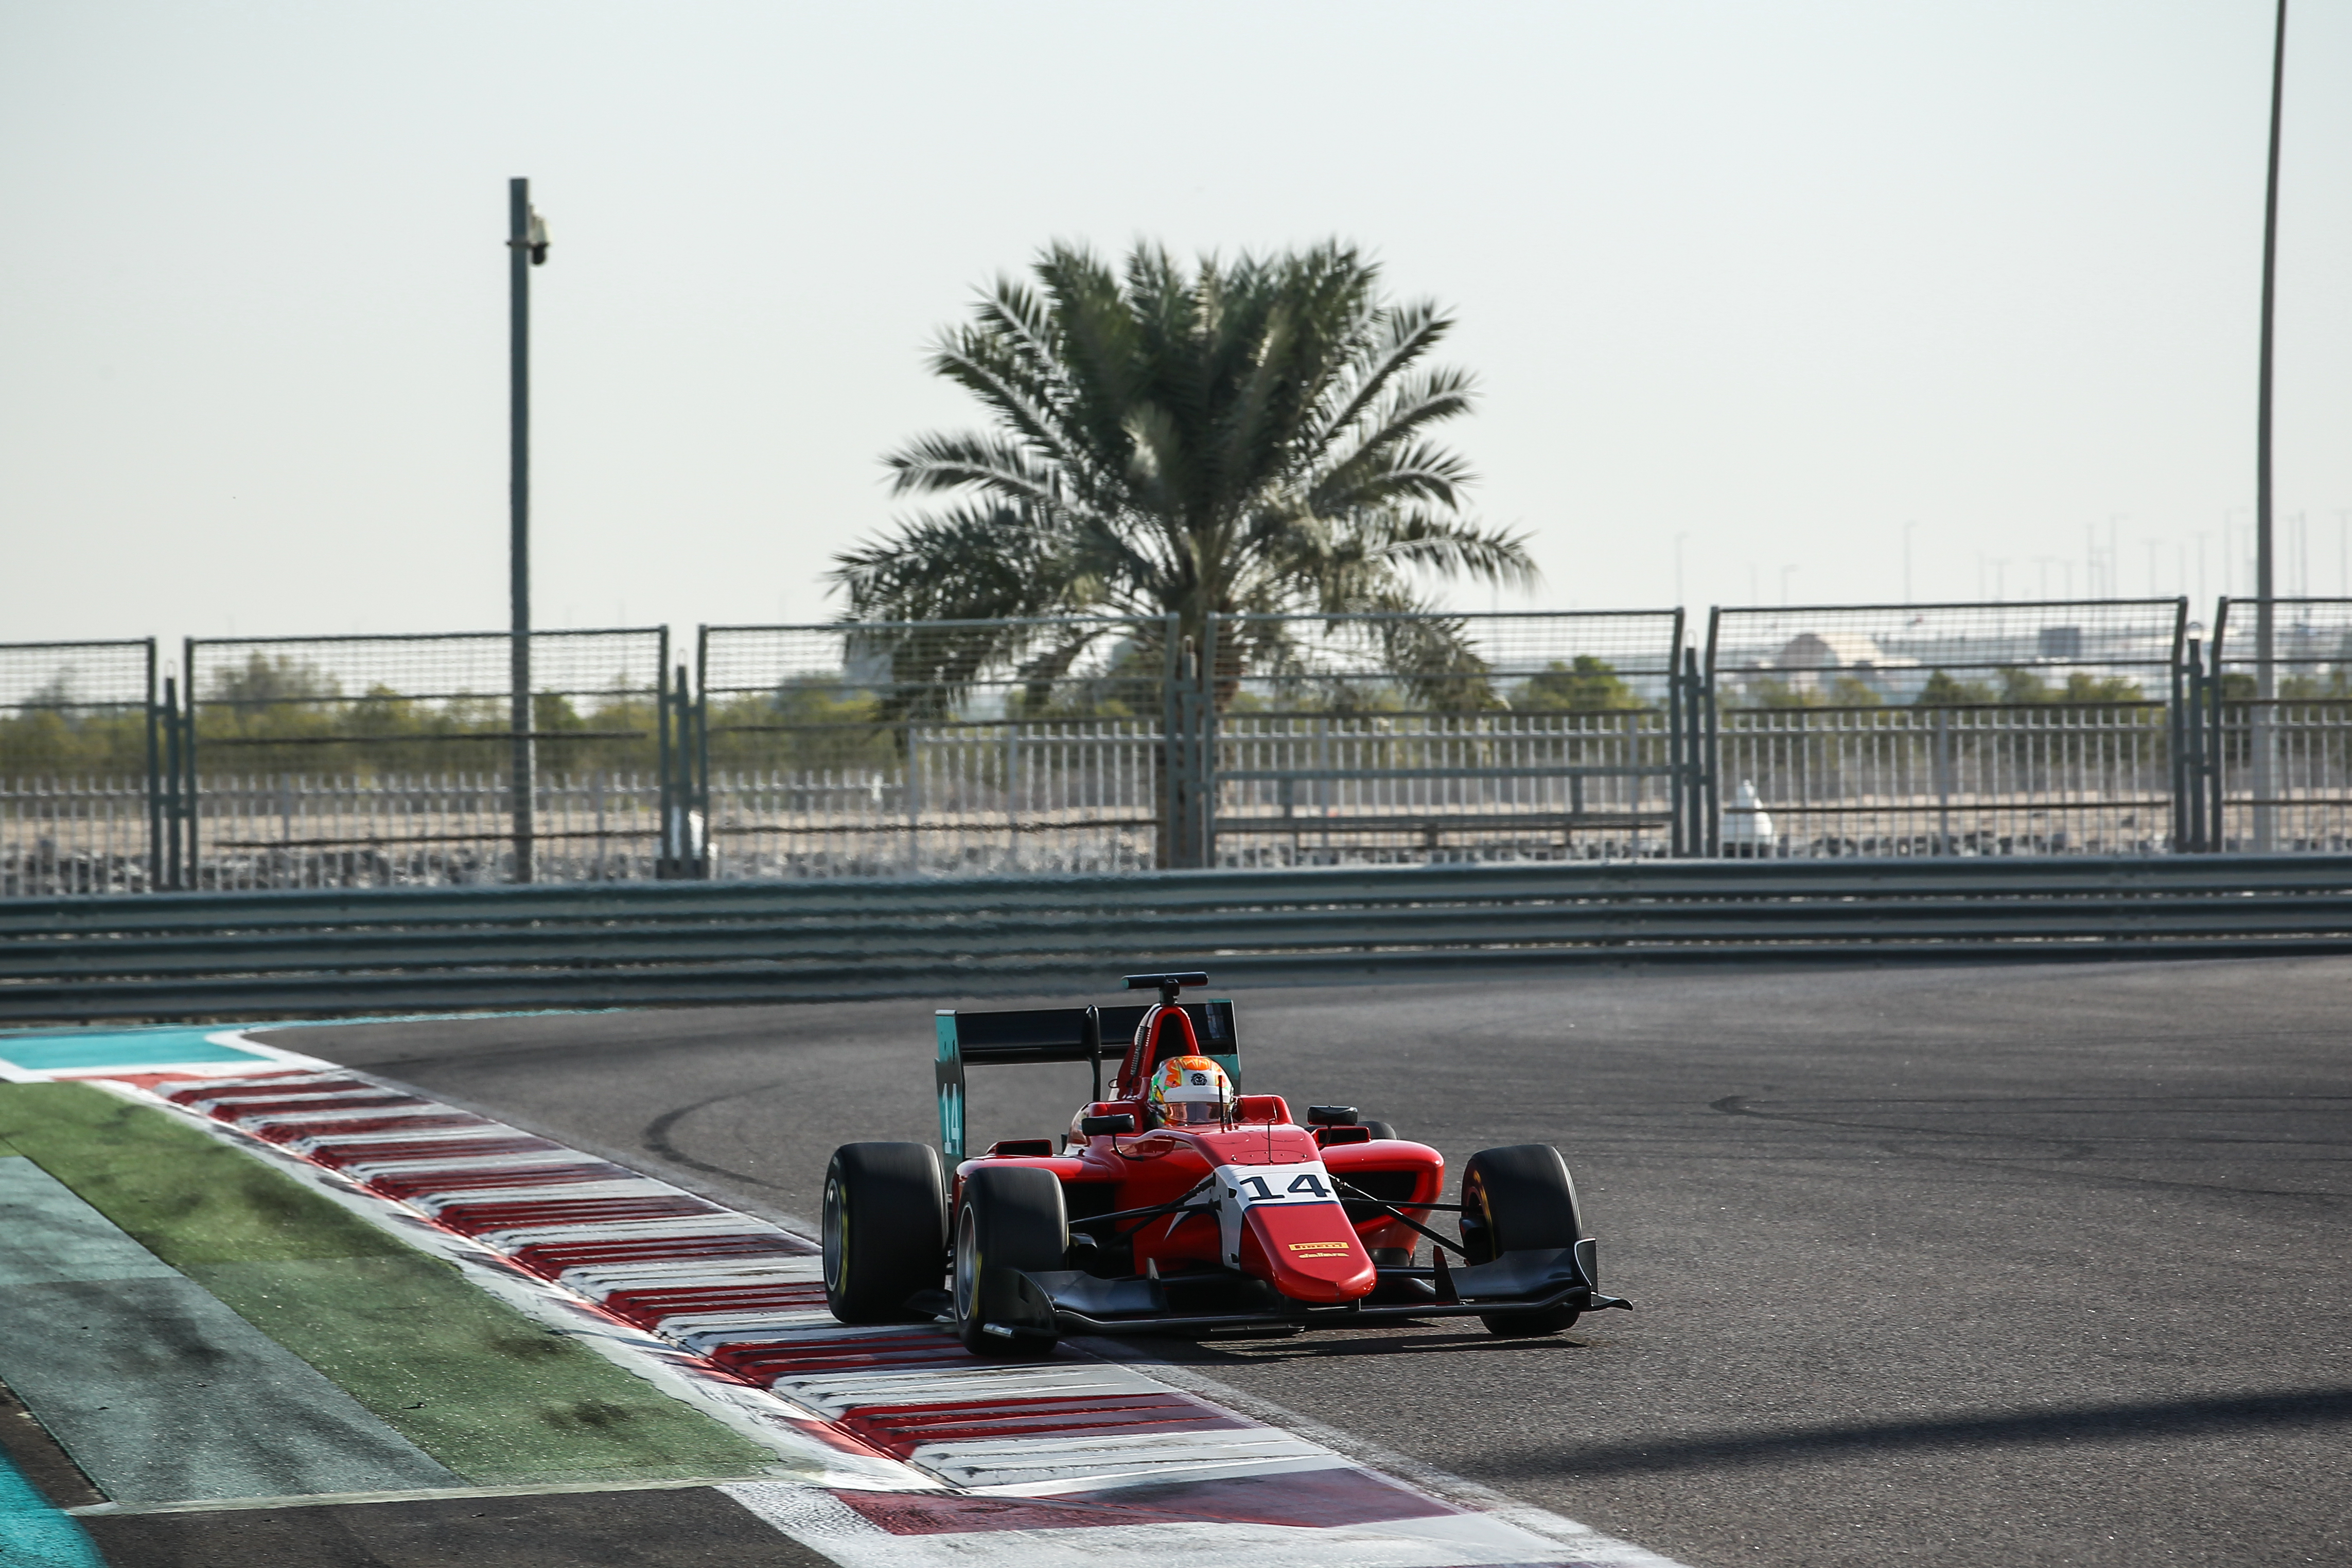 Ben Set for 2018 GP3 Test in Abu Dhabi